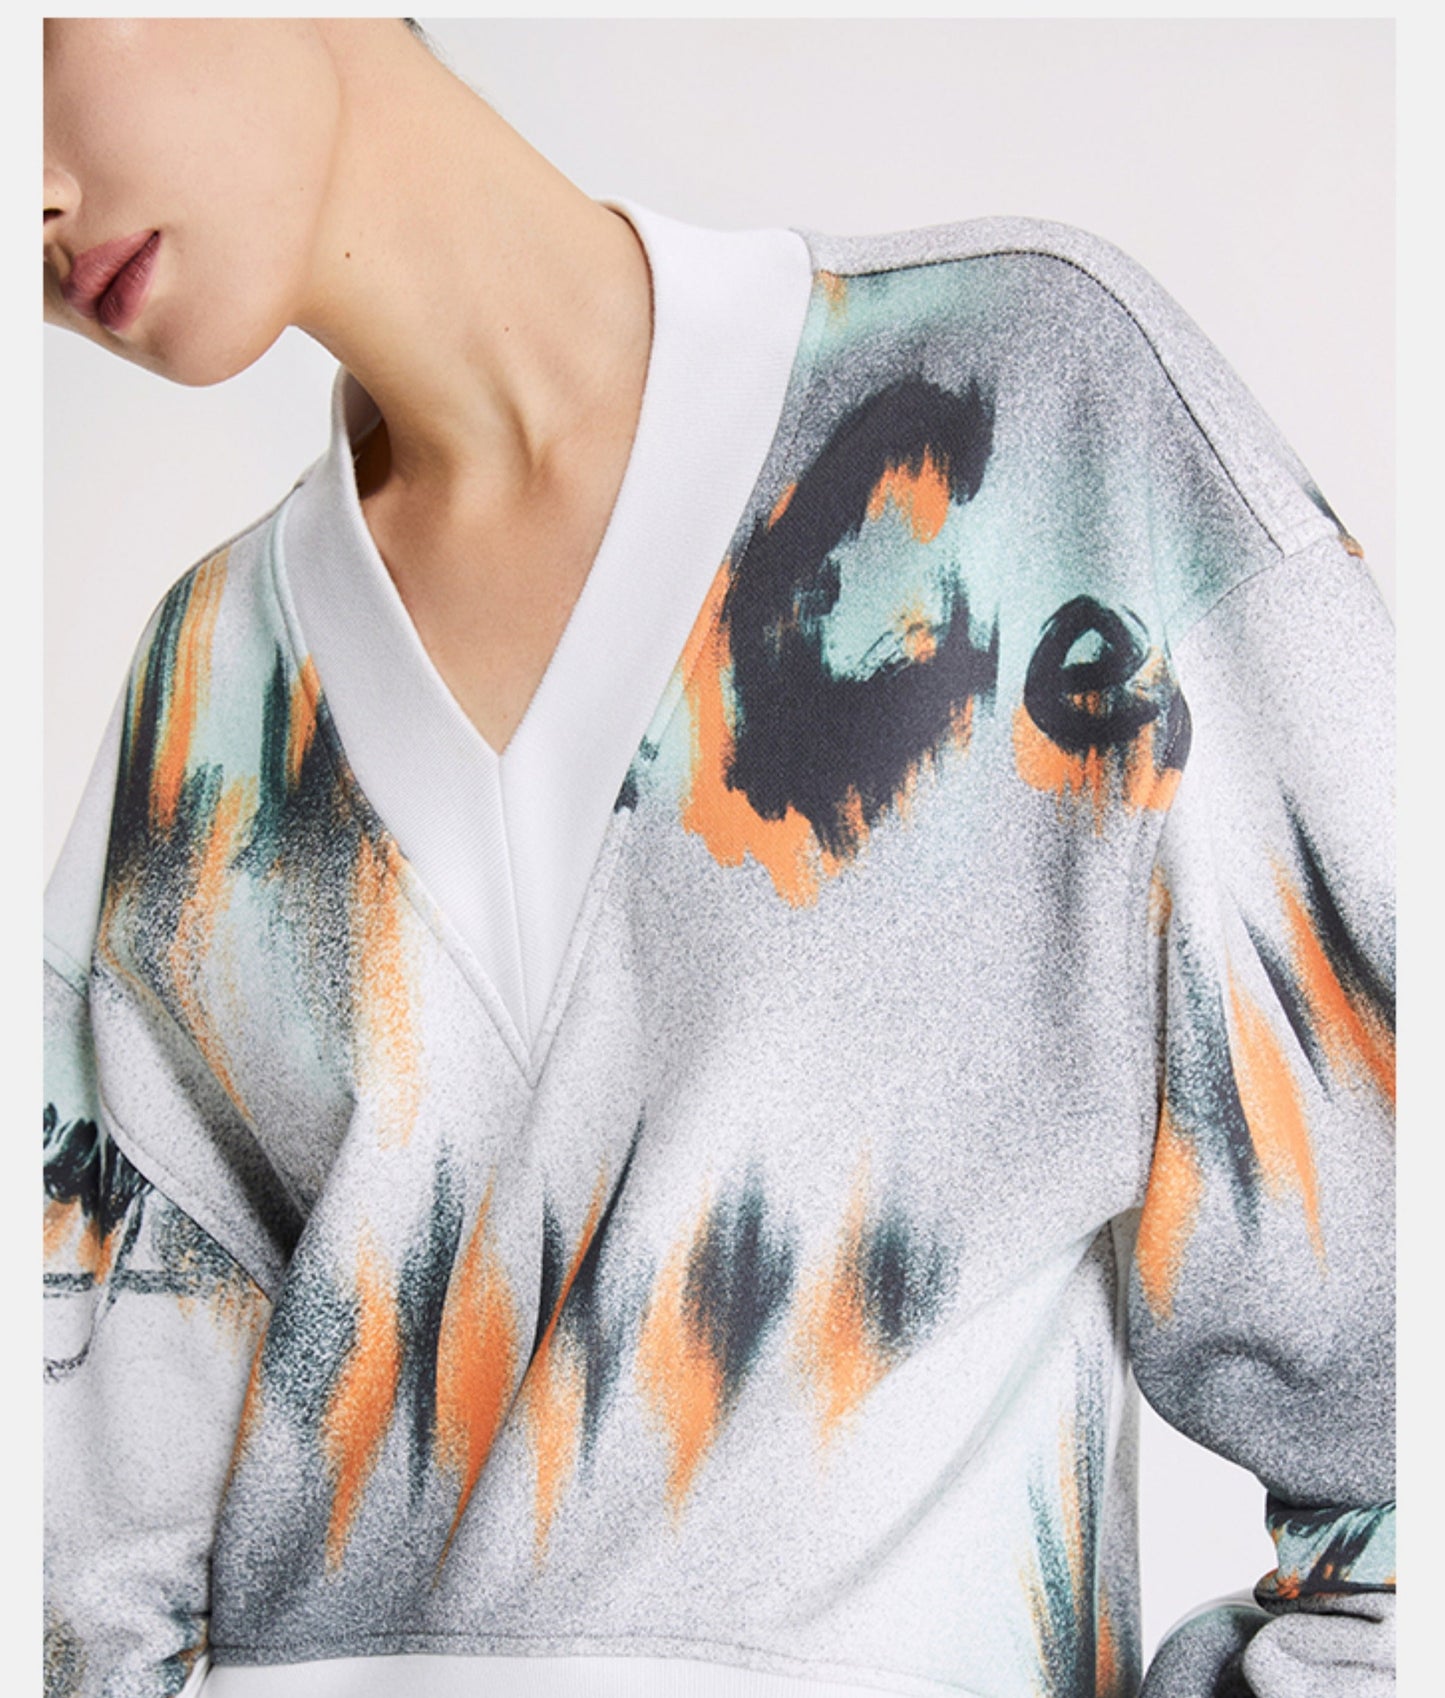 LEDIM W V-Neck printed sweatshirt stretch loose pullover top - Lolor